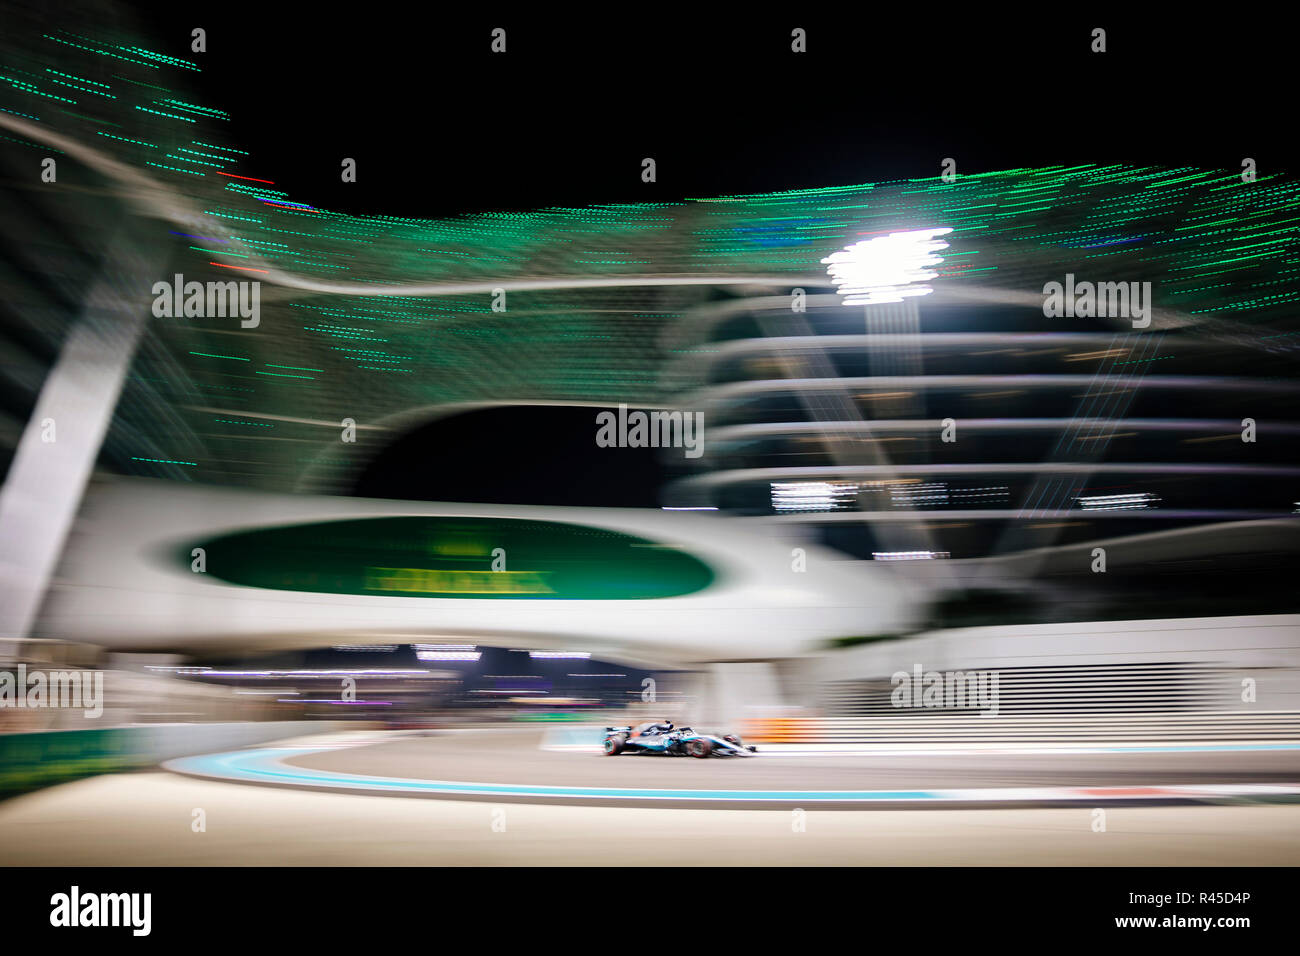 Abu Dhabi, UAE. 25th Nov, 2018. Mercedes AMG Petronas F1 Team’s British driver Lewis Hamilton competes during the Formula 1 Abu Dhabi Grand Prix race at the Yas Marina Circuit in Abu Dhabi on November 25, 2018. Credit: Jure Makovec/Alamy Live News Stock Photo